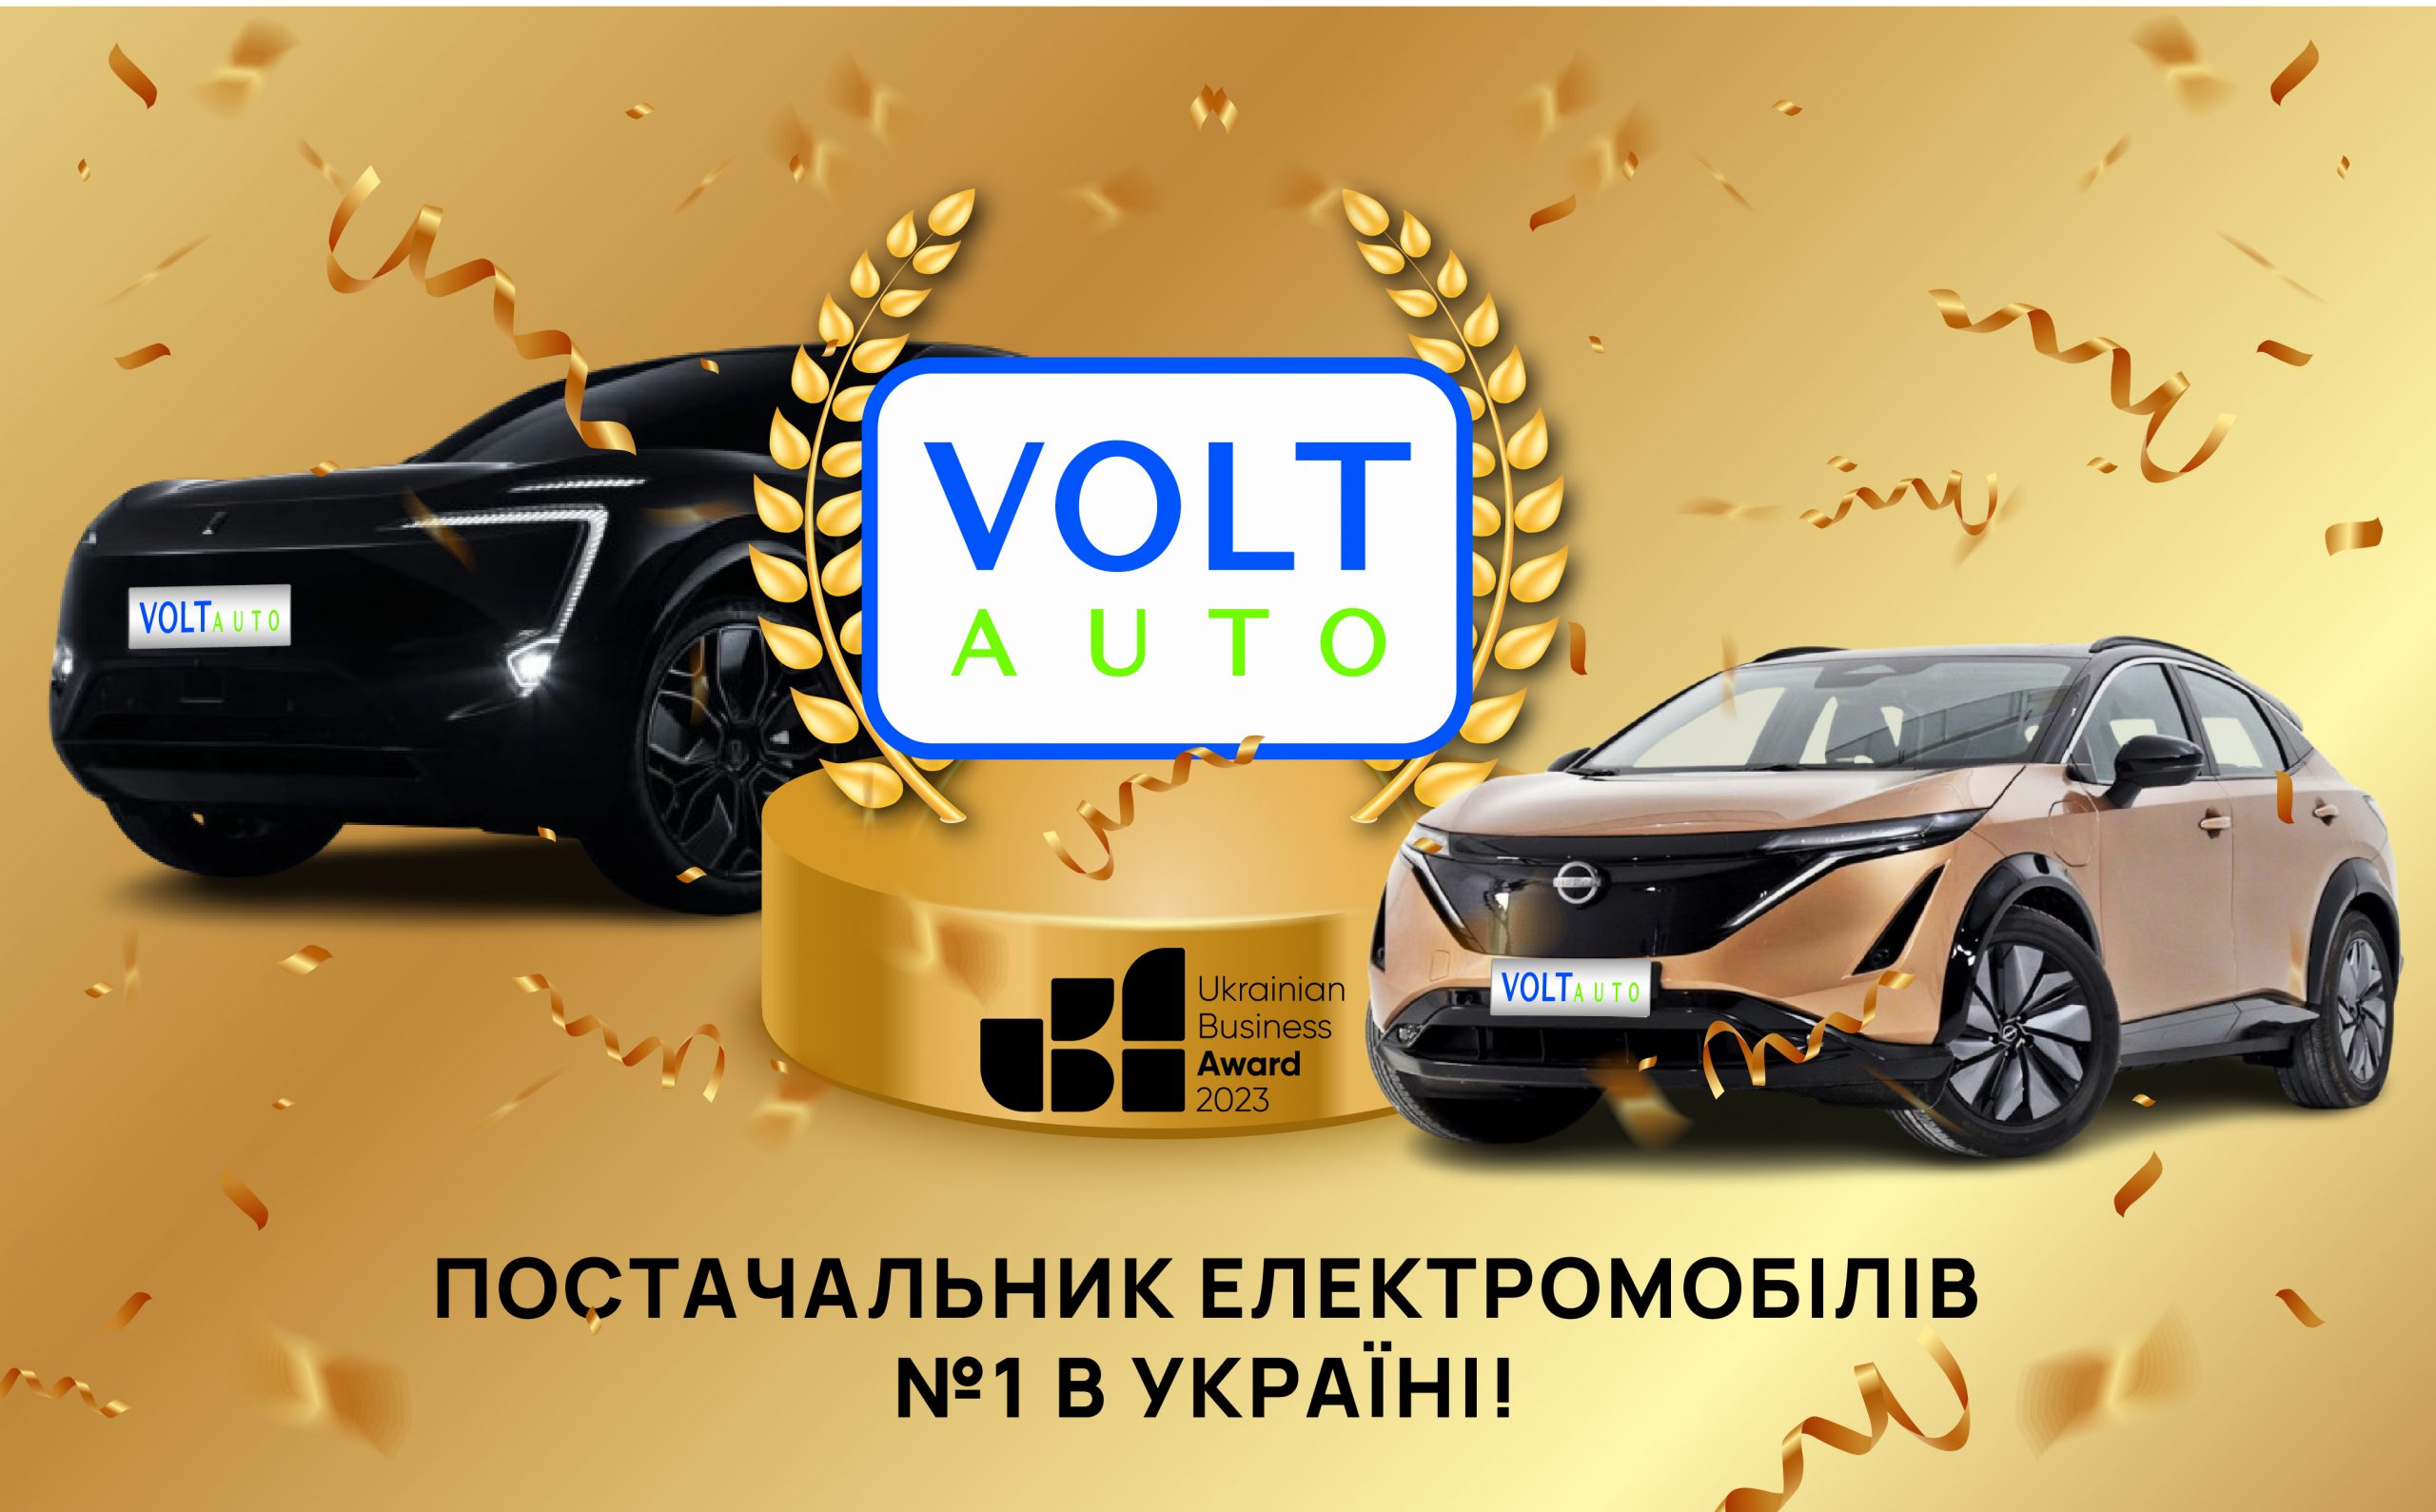 Ukrainian Business Award